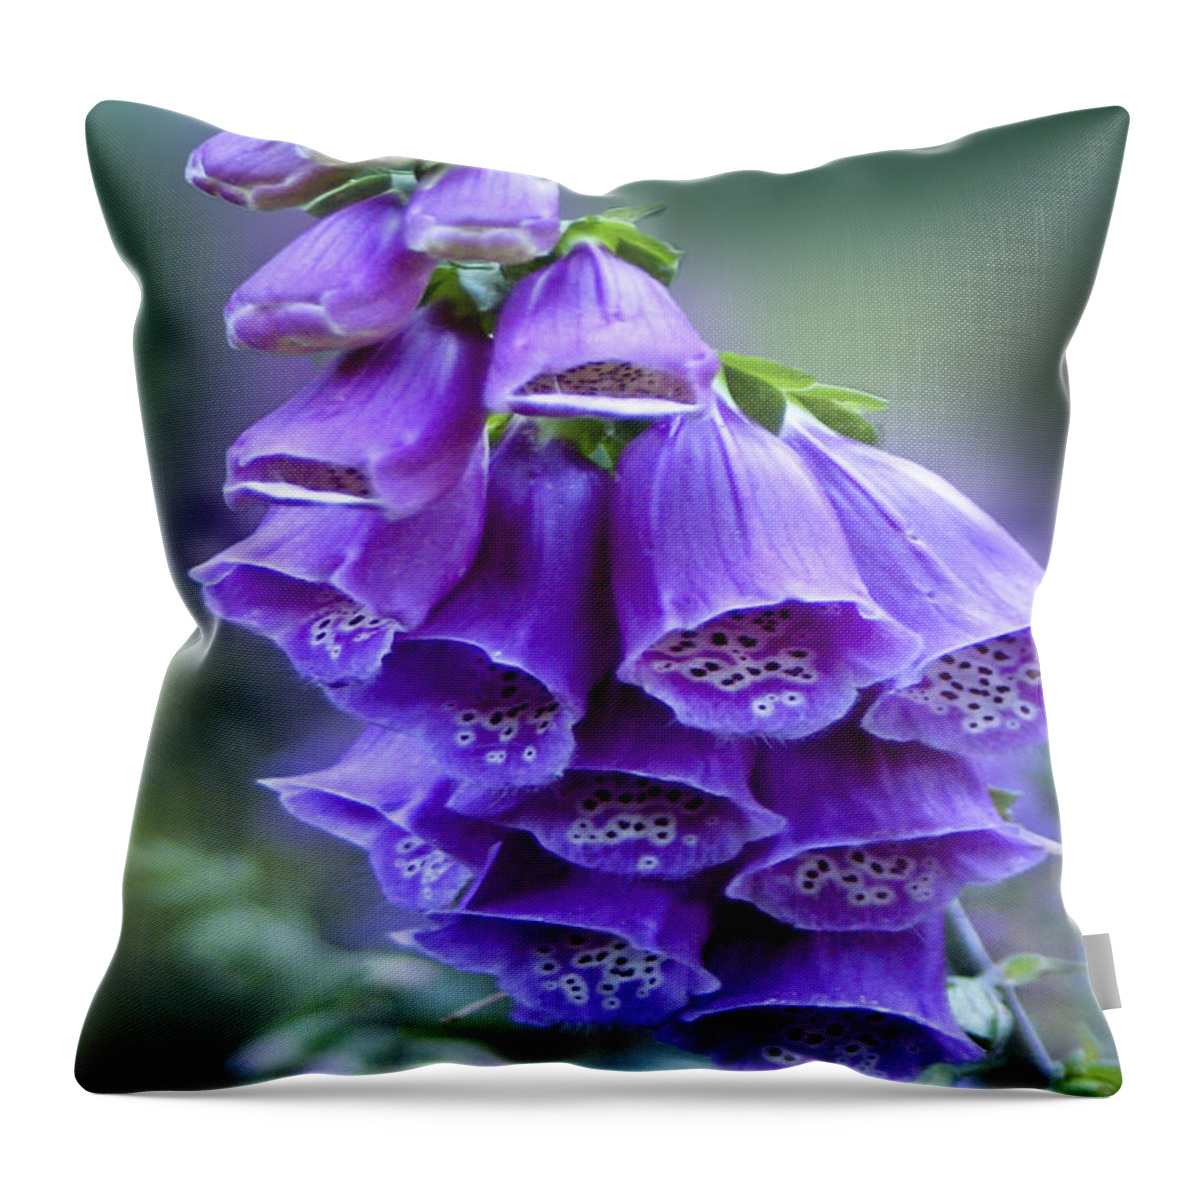 Bell Flowers Throw Pillow featuring the photograph Purple Foxglove Flower by Carol F Austin